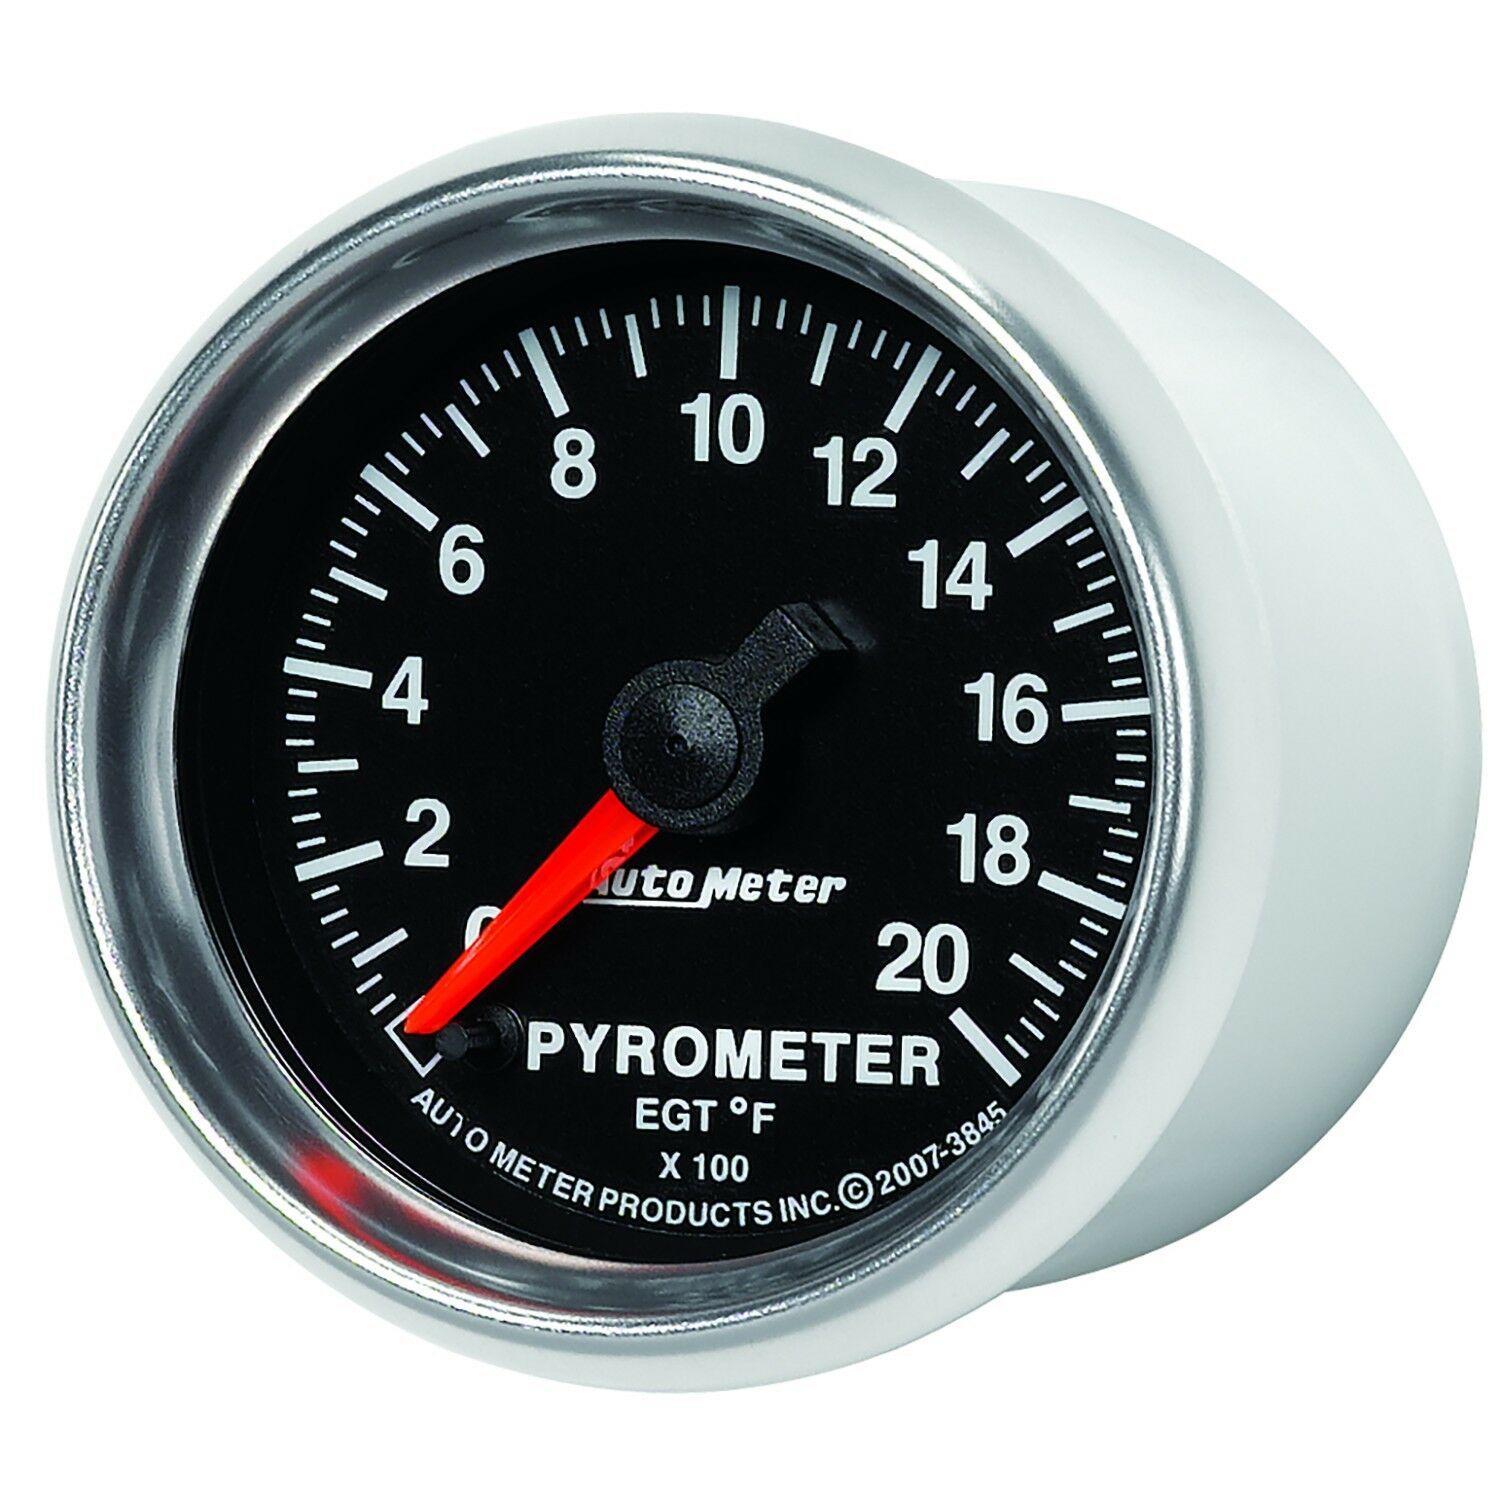 AutoMeter GS Series Analog Pyrometer Gauge 0-2000 °F - 3845